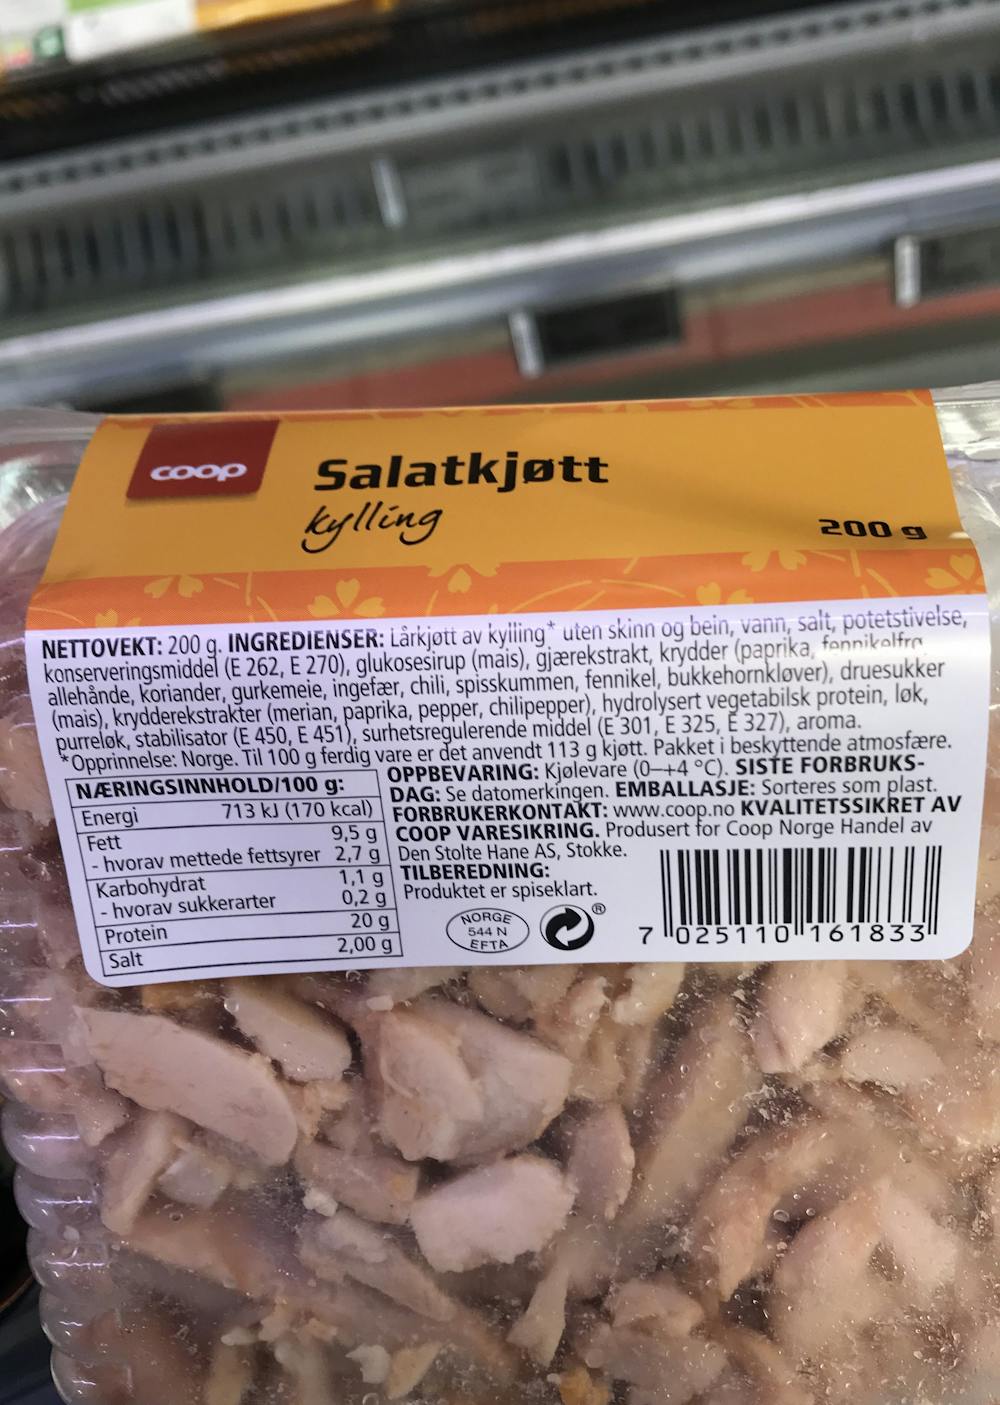 Ingrediensliste - Salatkjøtt kylling, Coop